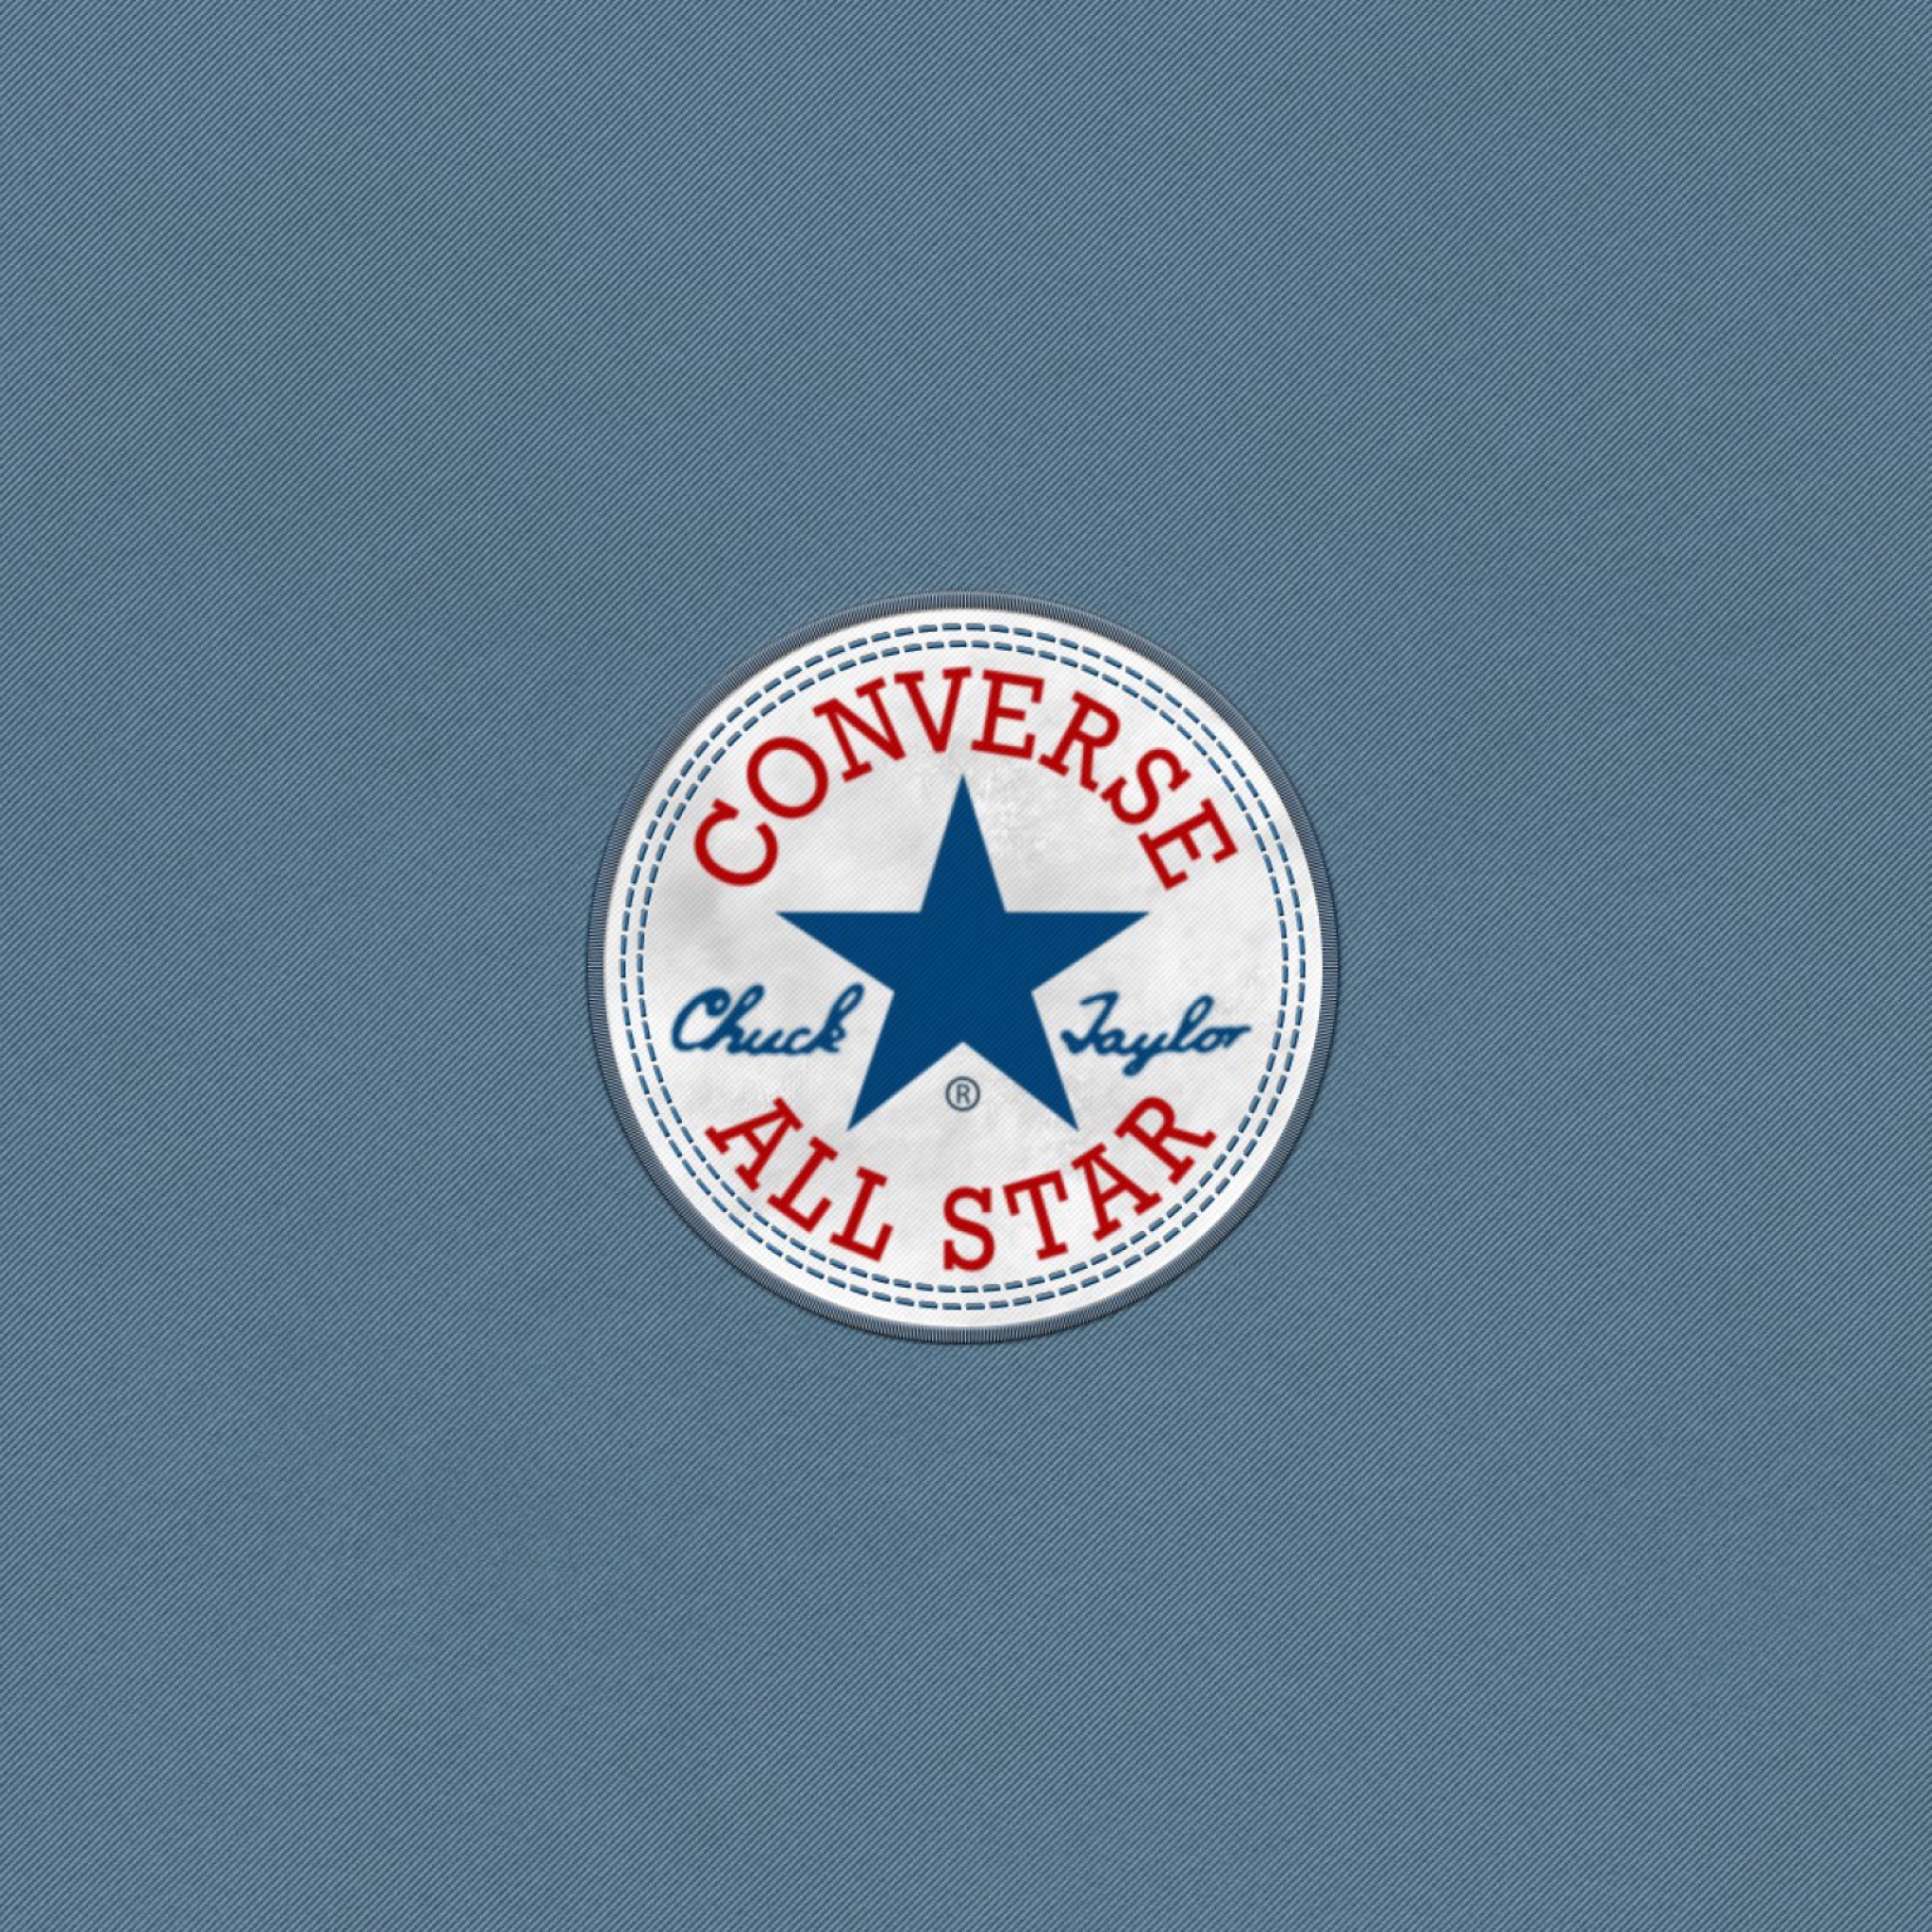 Converse All Stars wallpaper 2048x2048